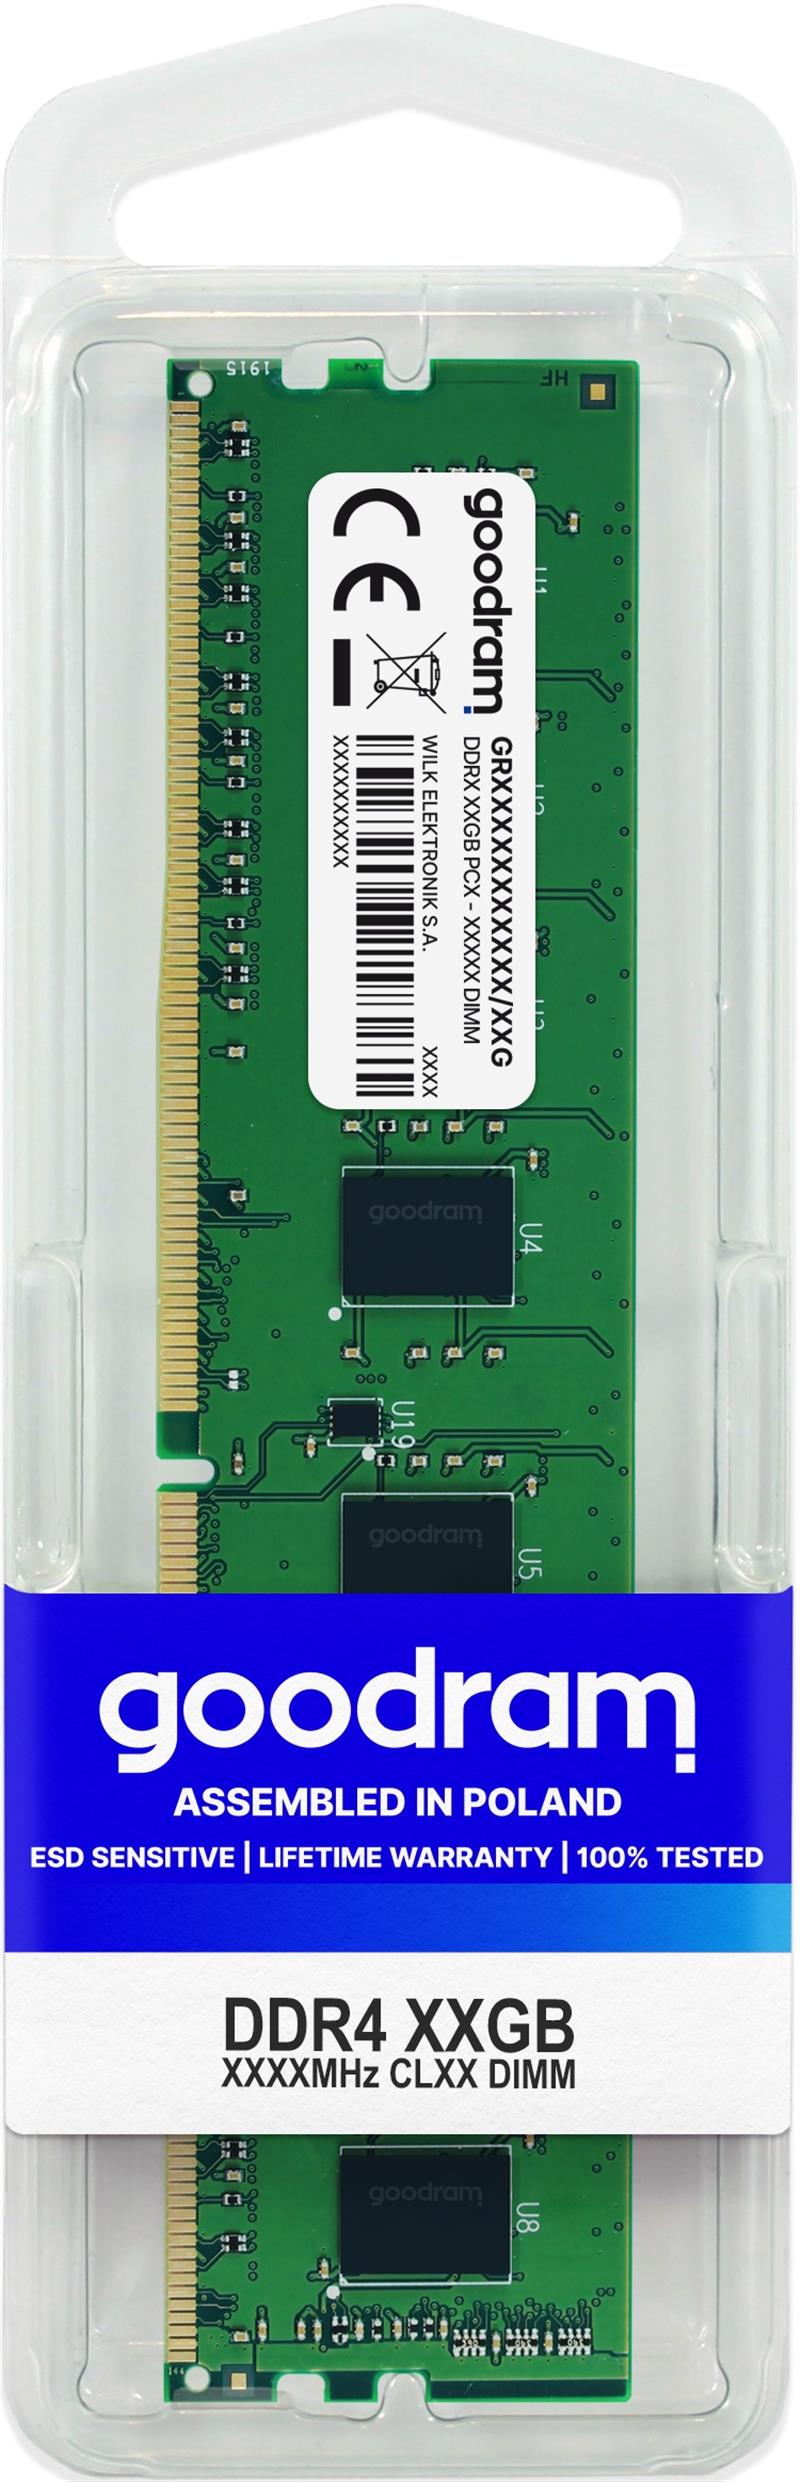 Goodram GR2400D464L17S/4G geheugenmodule 4 GB 1 x 4 GB DDR4 2400 MHz